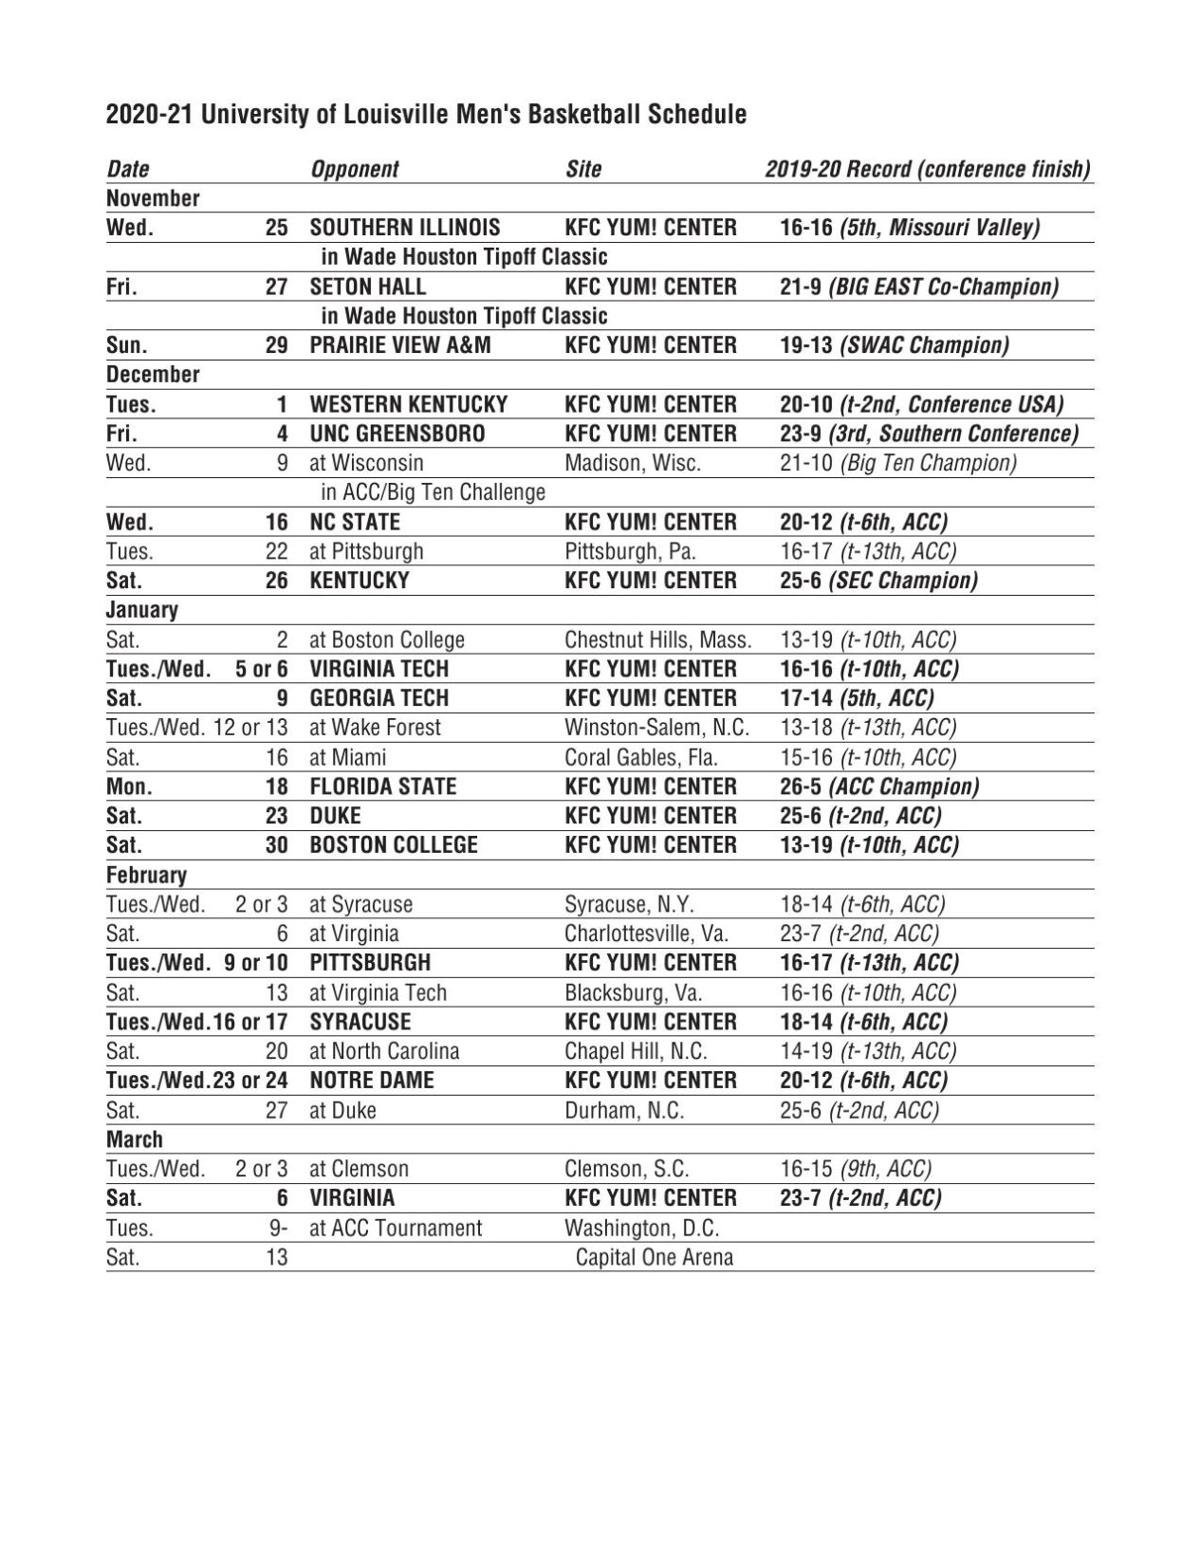 At long last, Louisville men's basketball ACC schedule is set